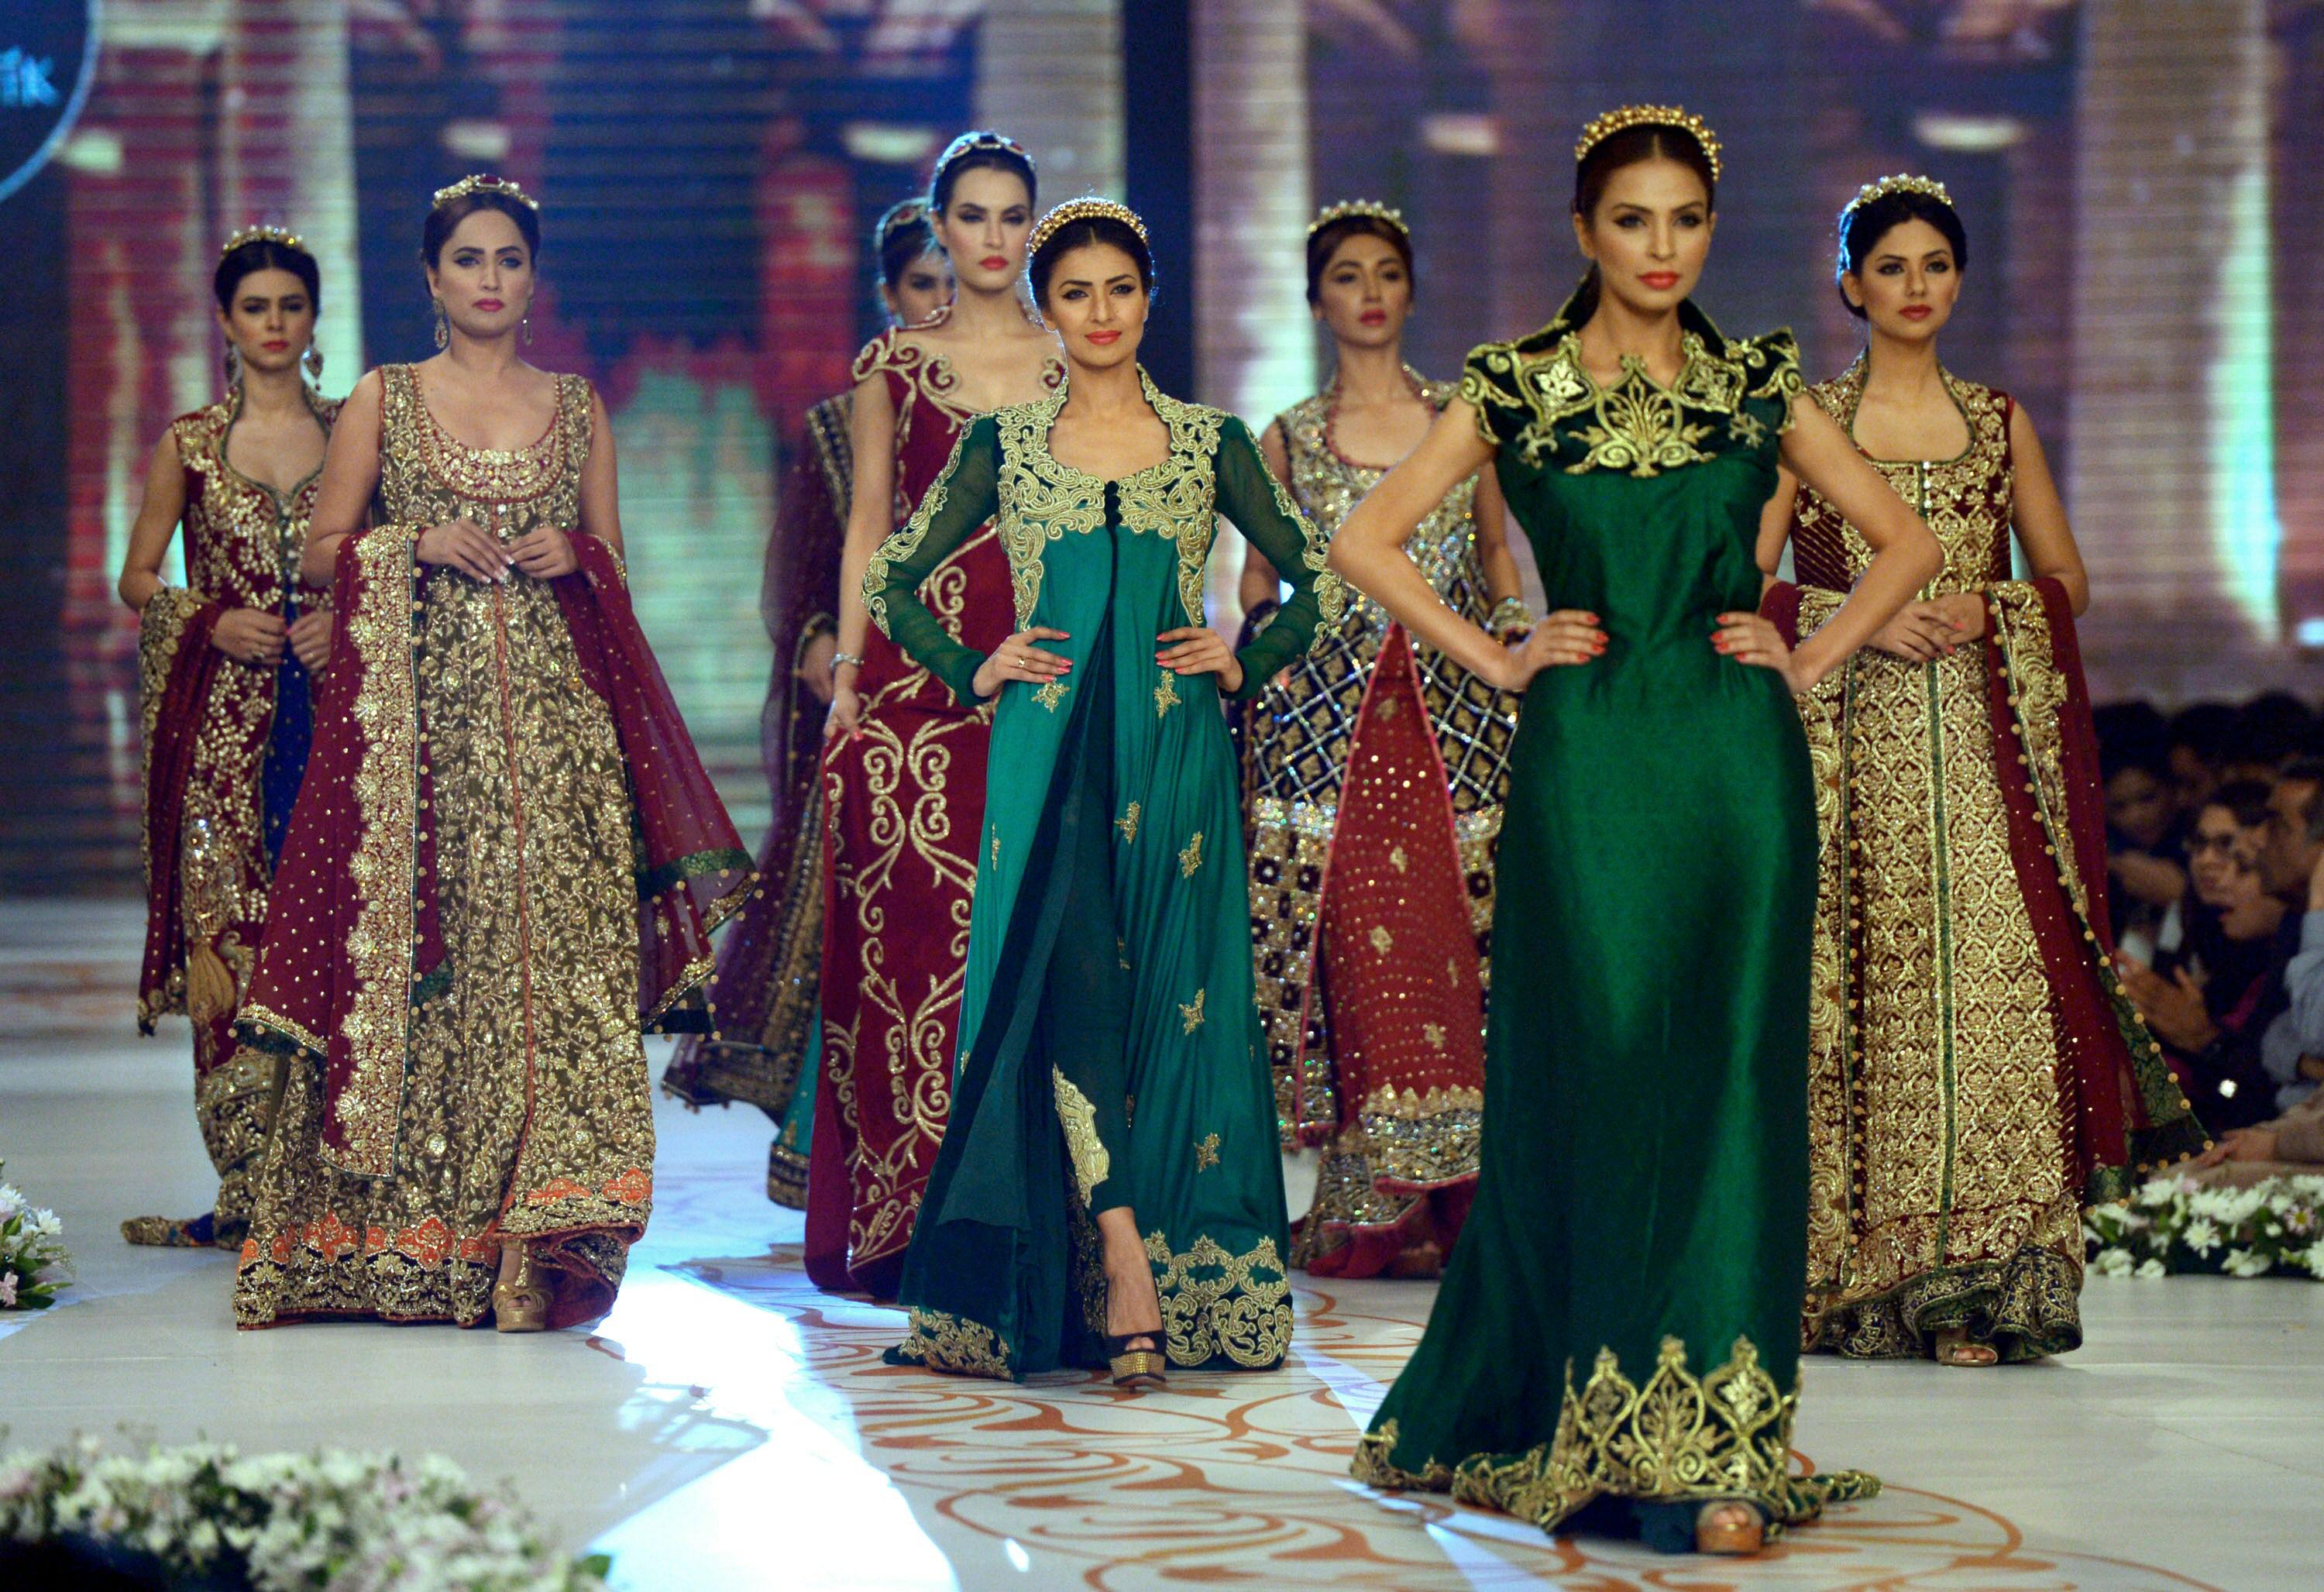 Pakistani models present bridal couture - Lifestyle - Emirates24|7